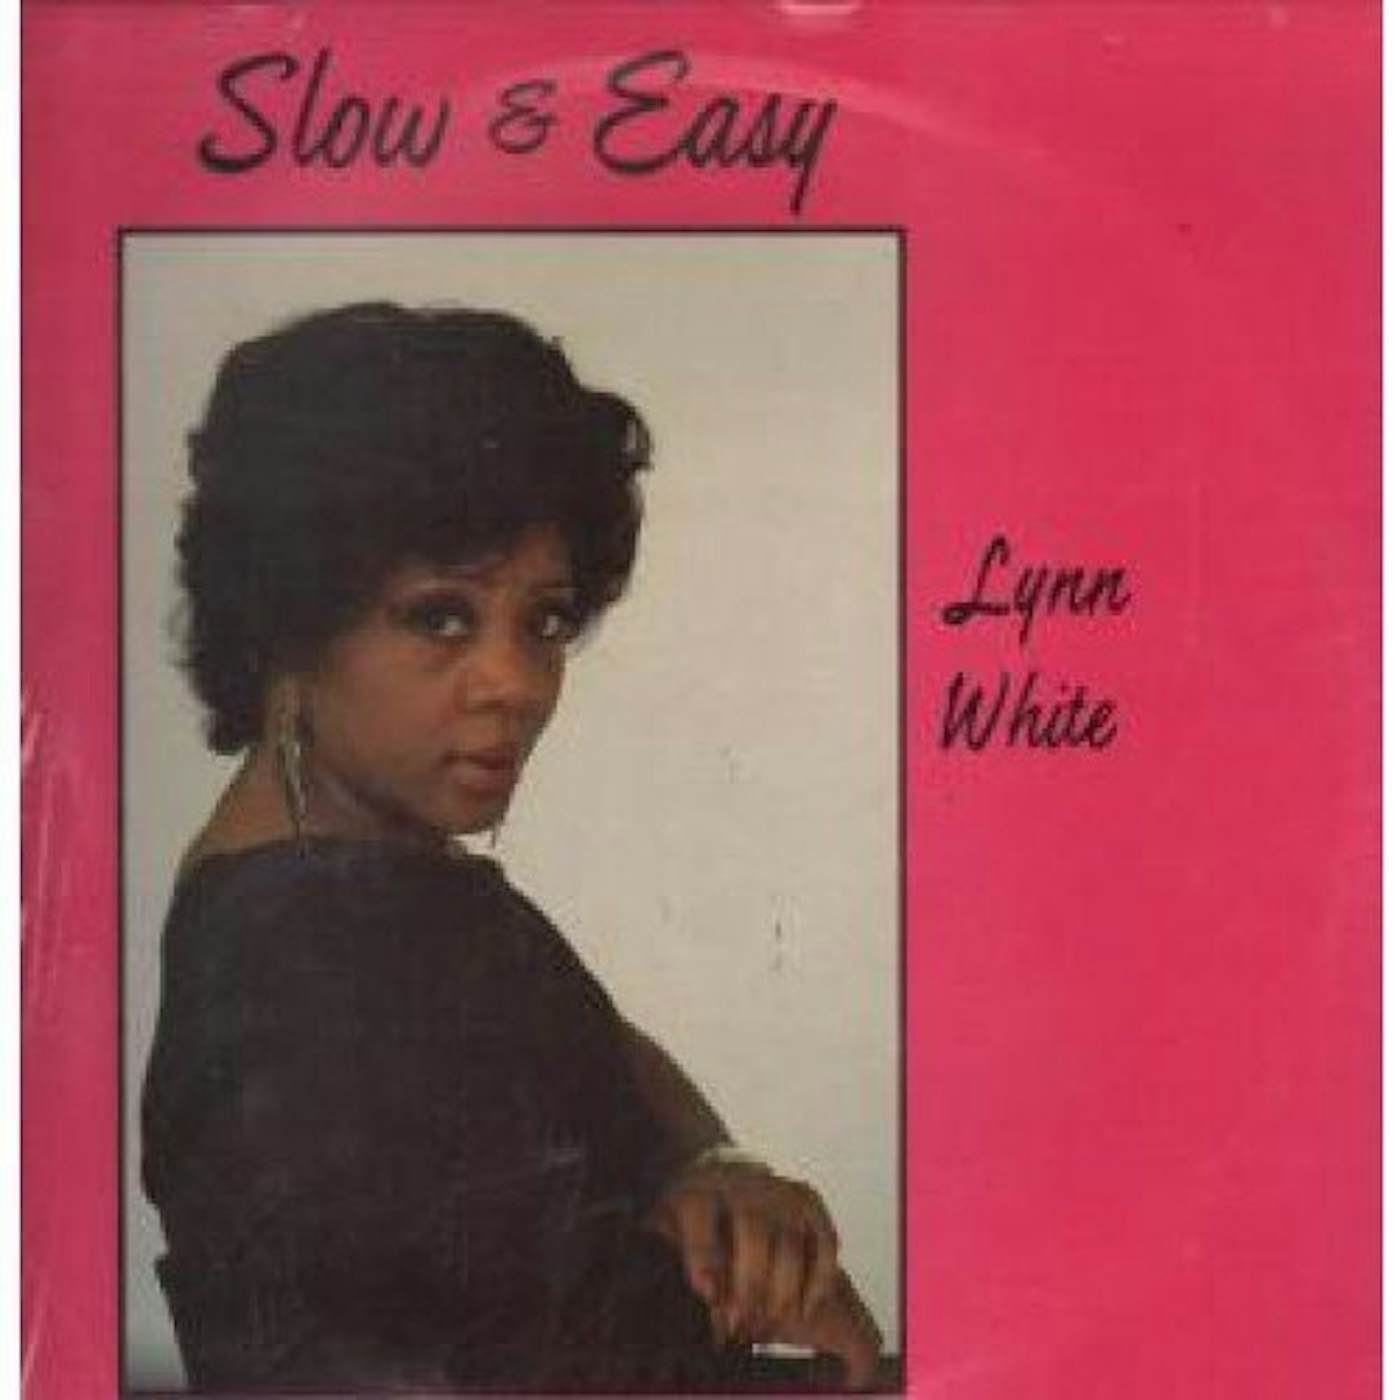 Lynn White SLOW & EASY Vinyl Record